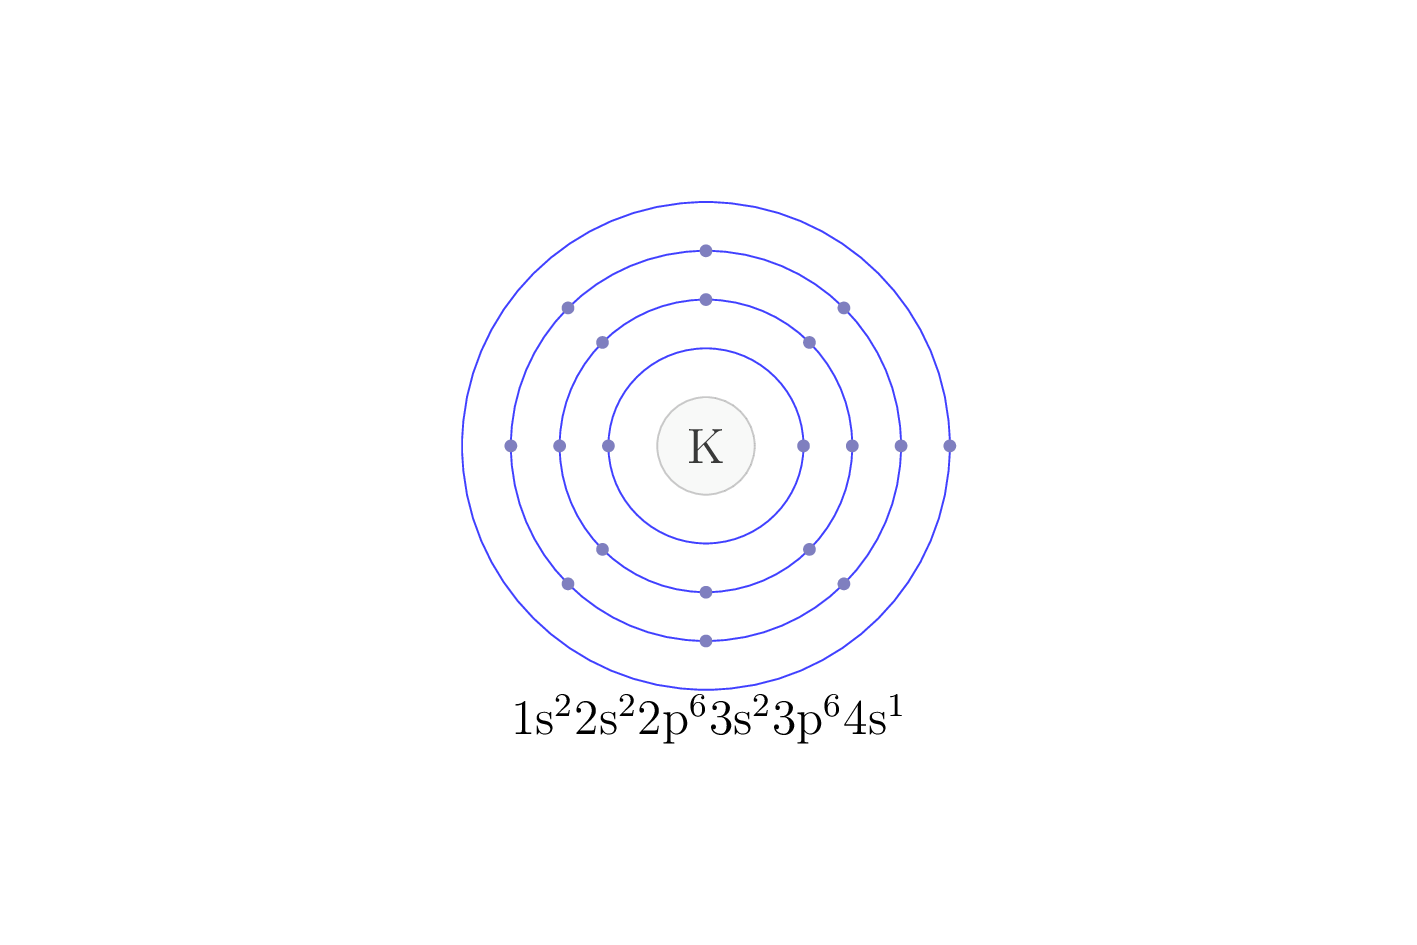 electron configuration of element K